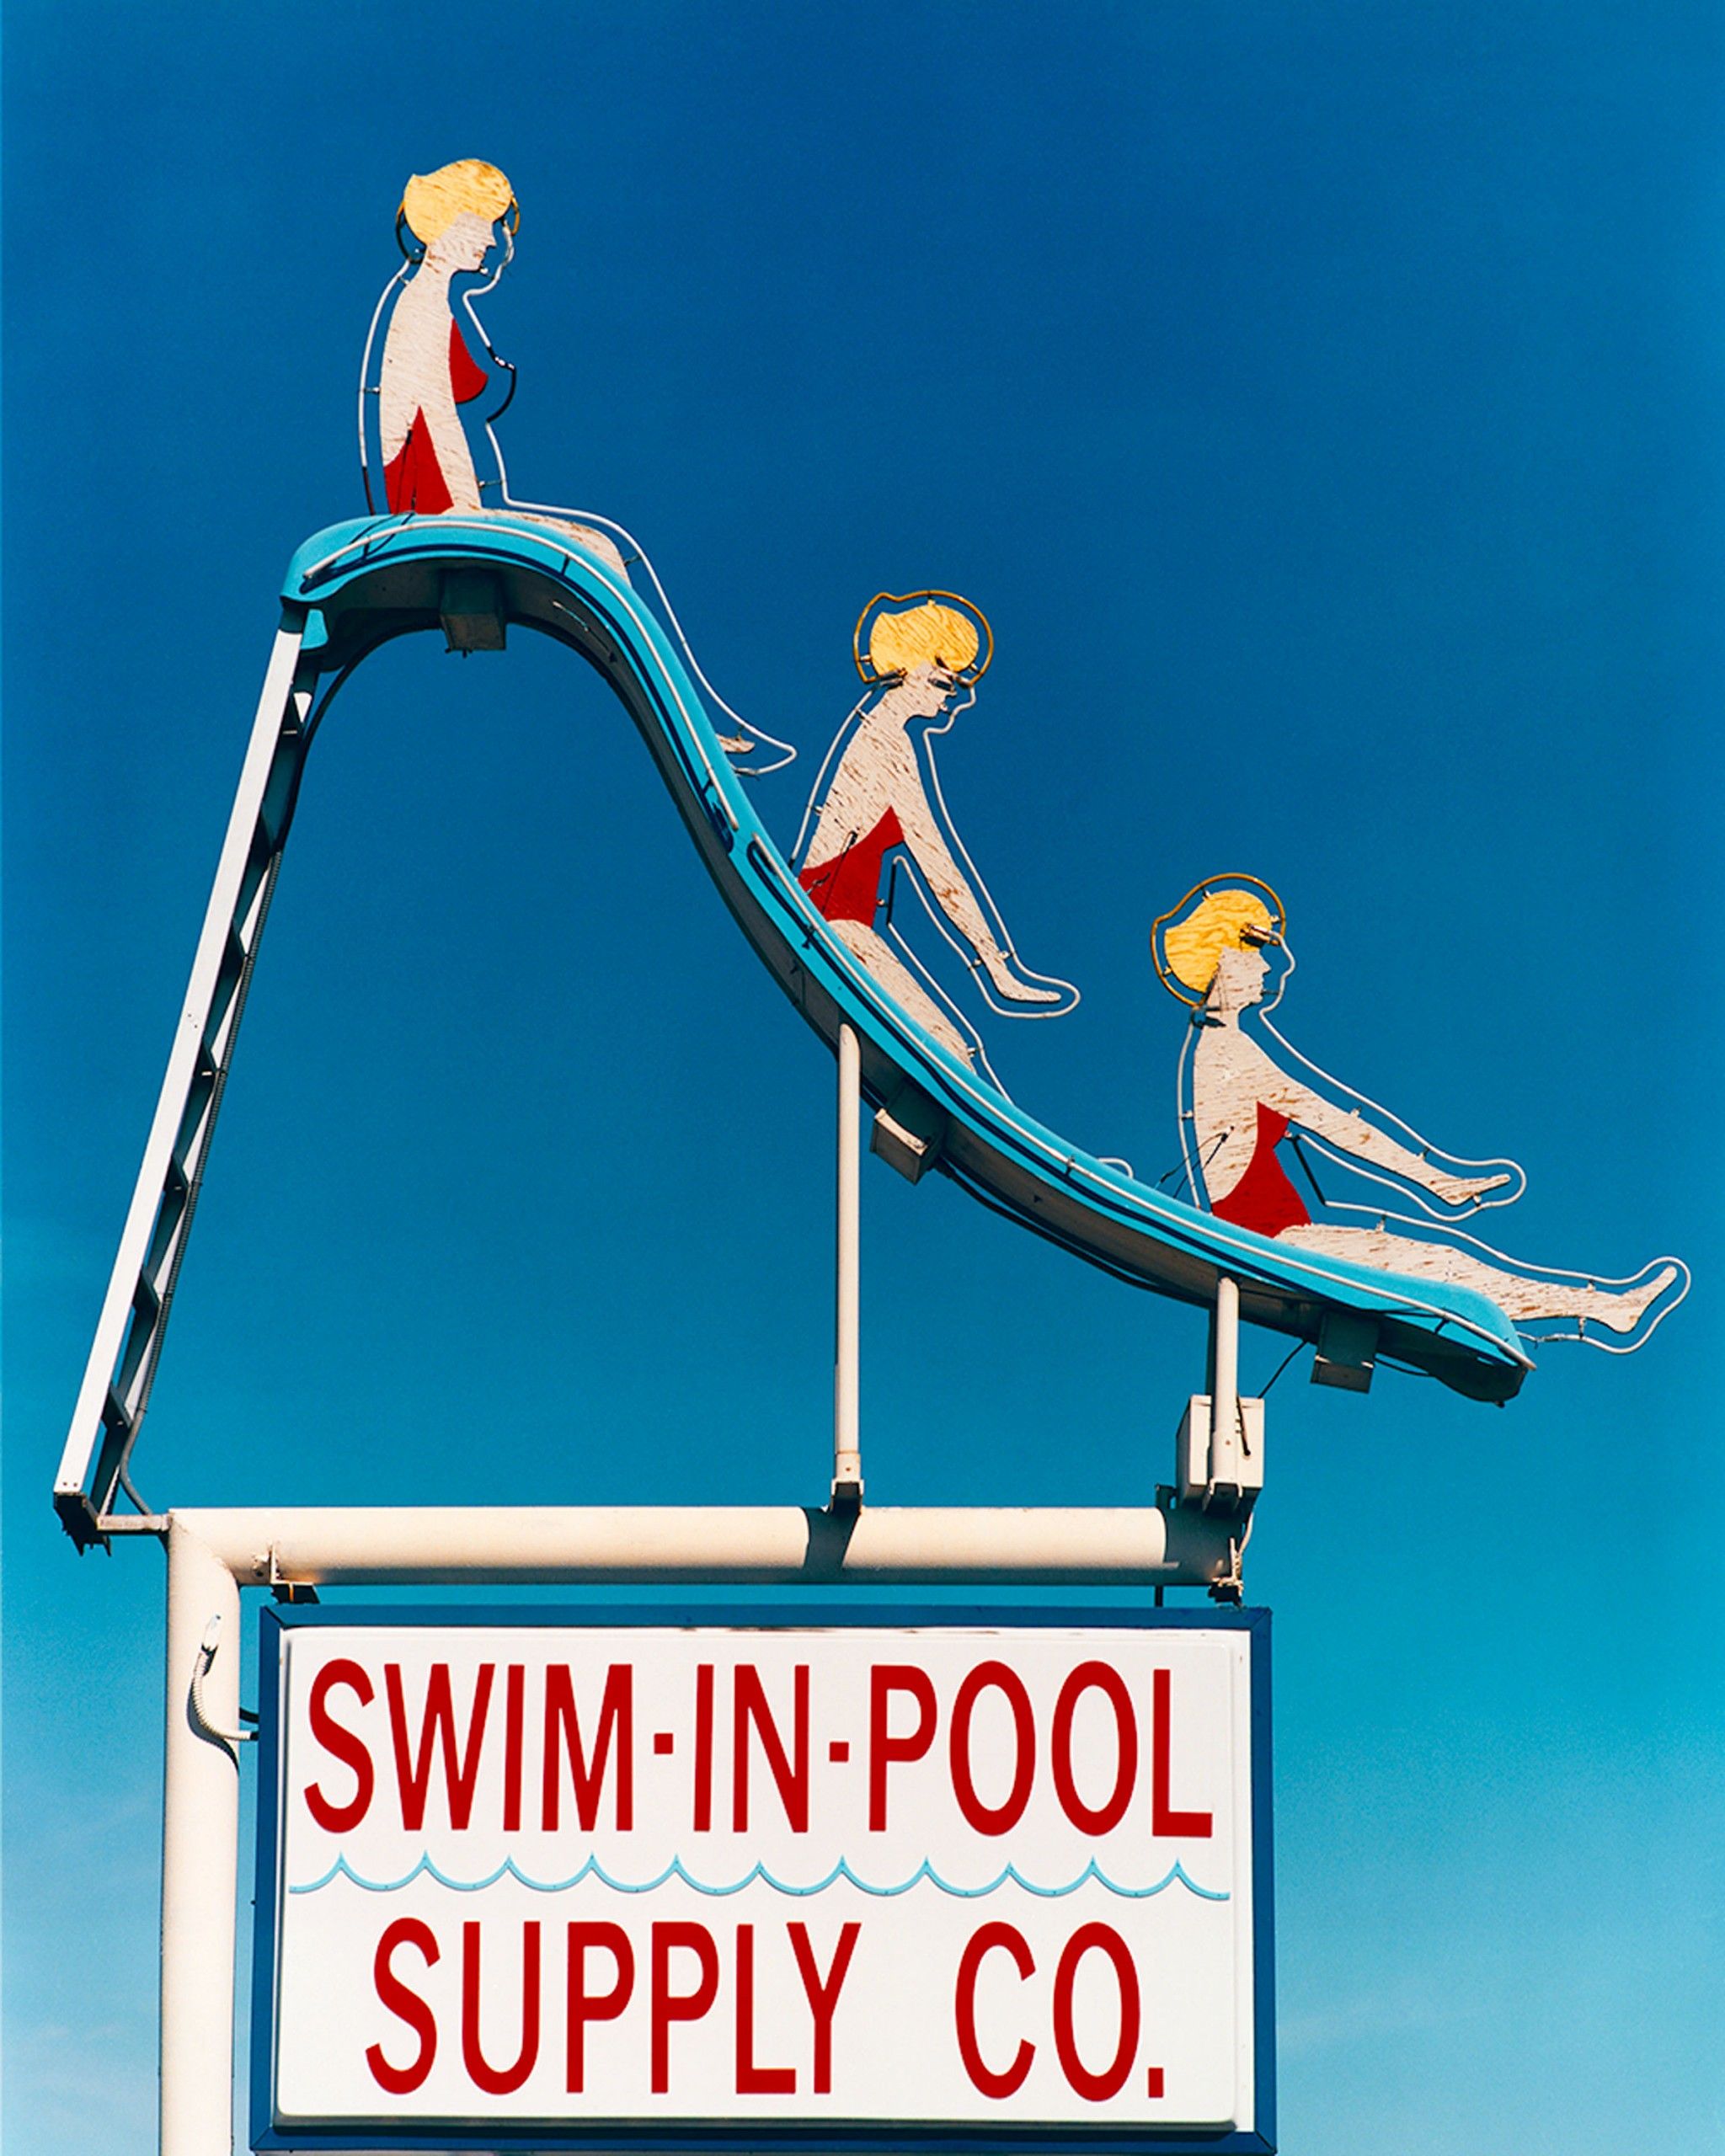 Swim-in-Pool Supply Co. Las Vegas by Richard Heeps